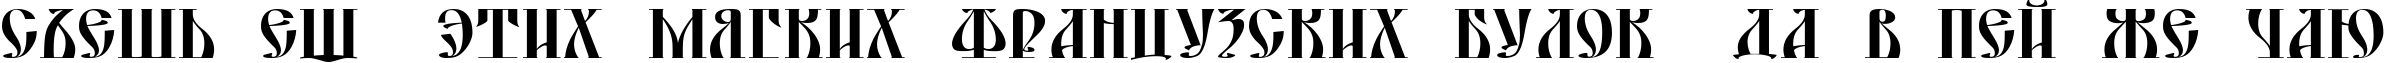 Пример написания шрифтом DS Yermak_D текста на русском